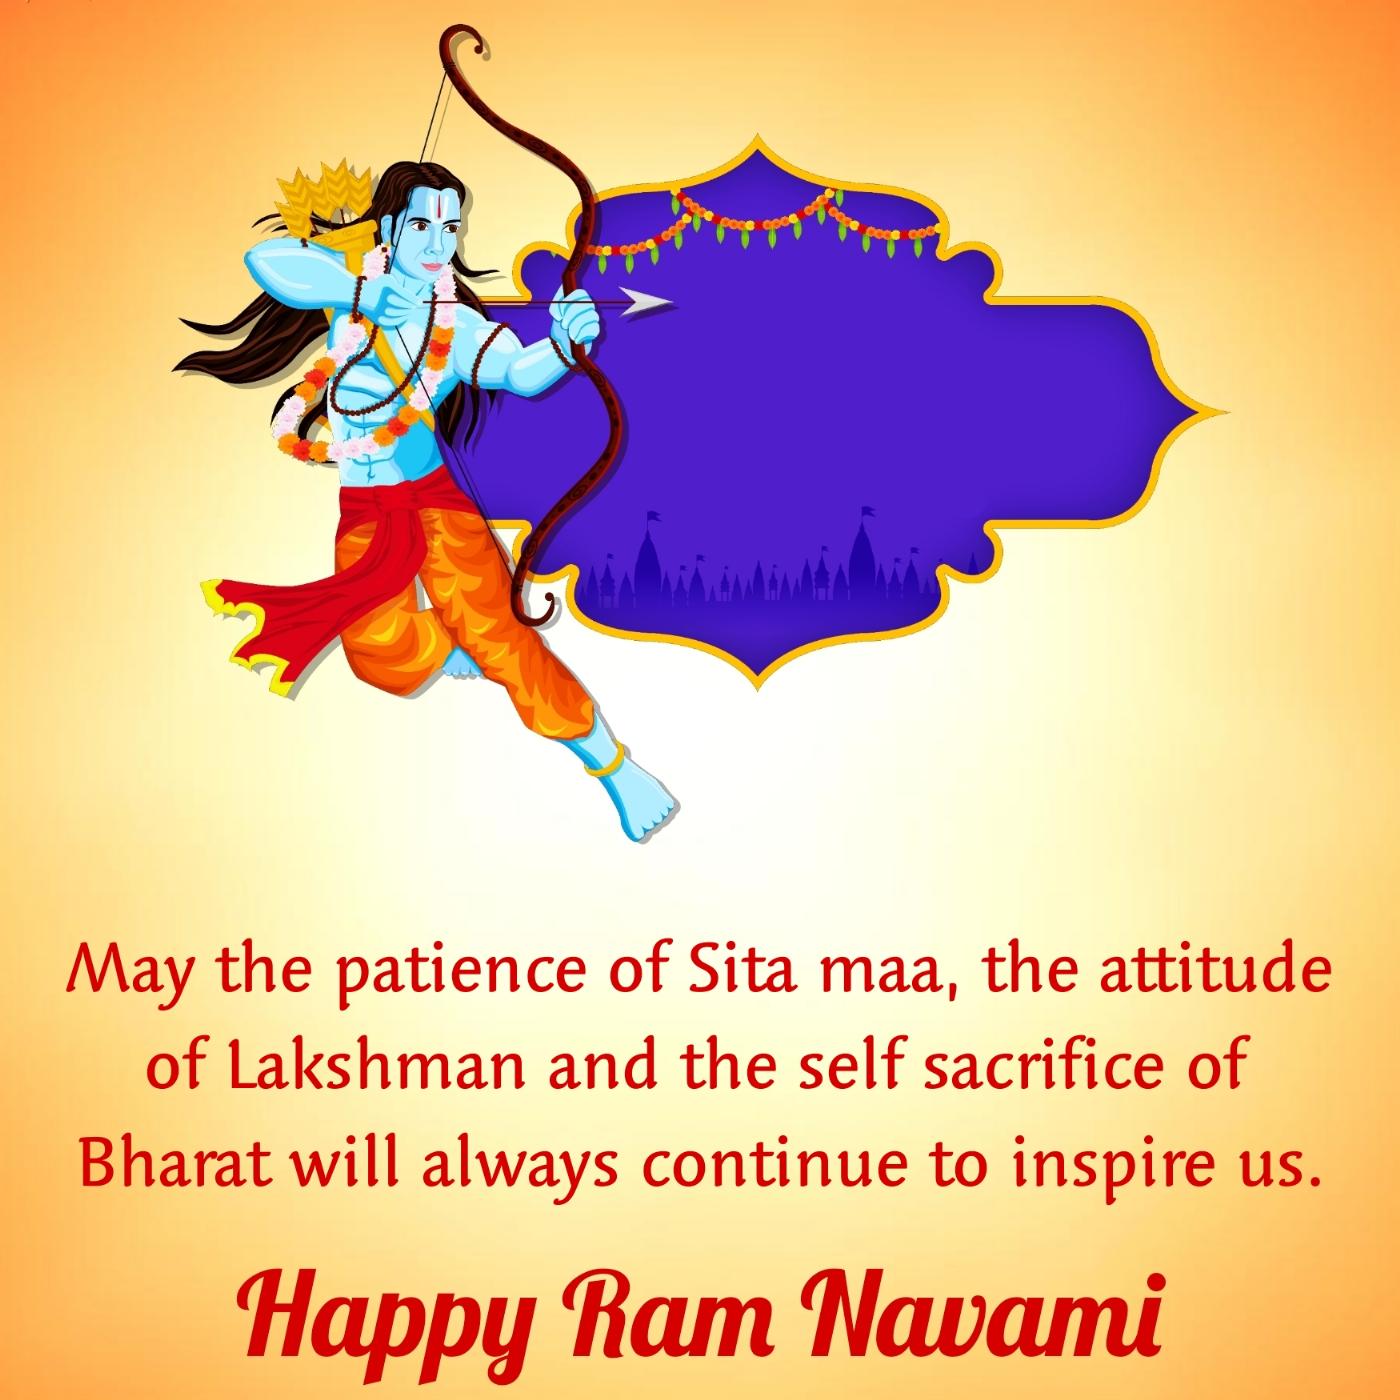 May the patience of Sita maa the attitude of Lakshman